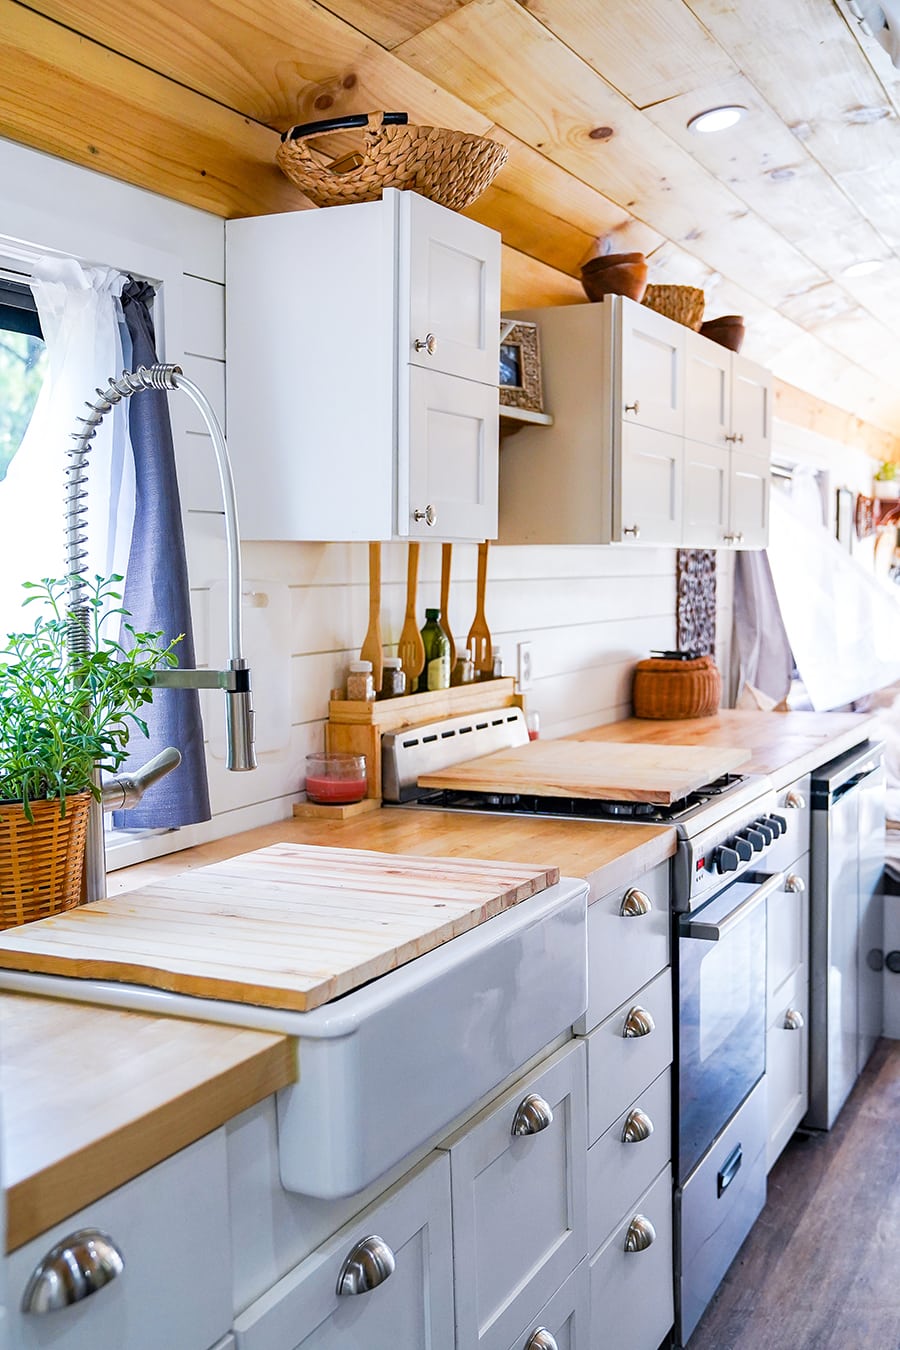 amazing tiny kitchen design inside converted school bus @happyhomebodies